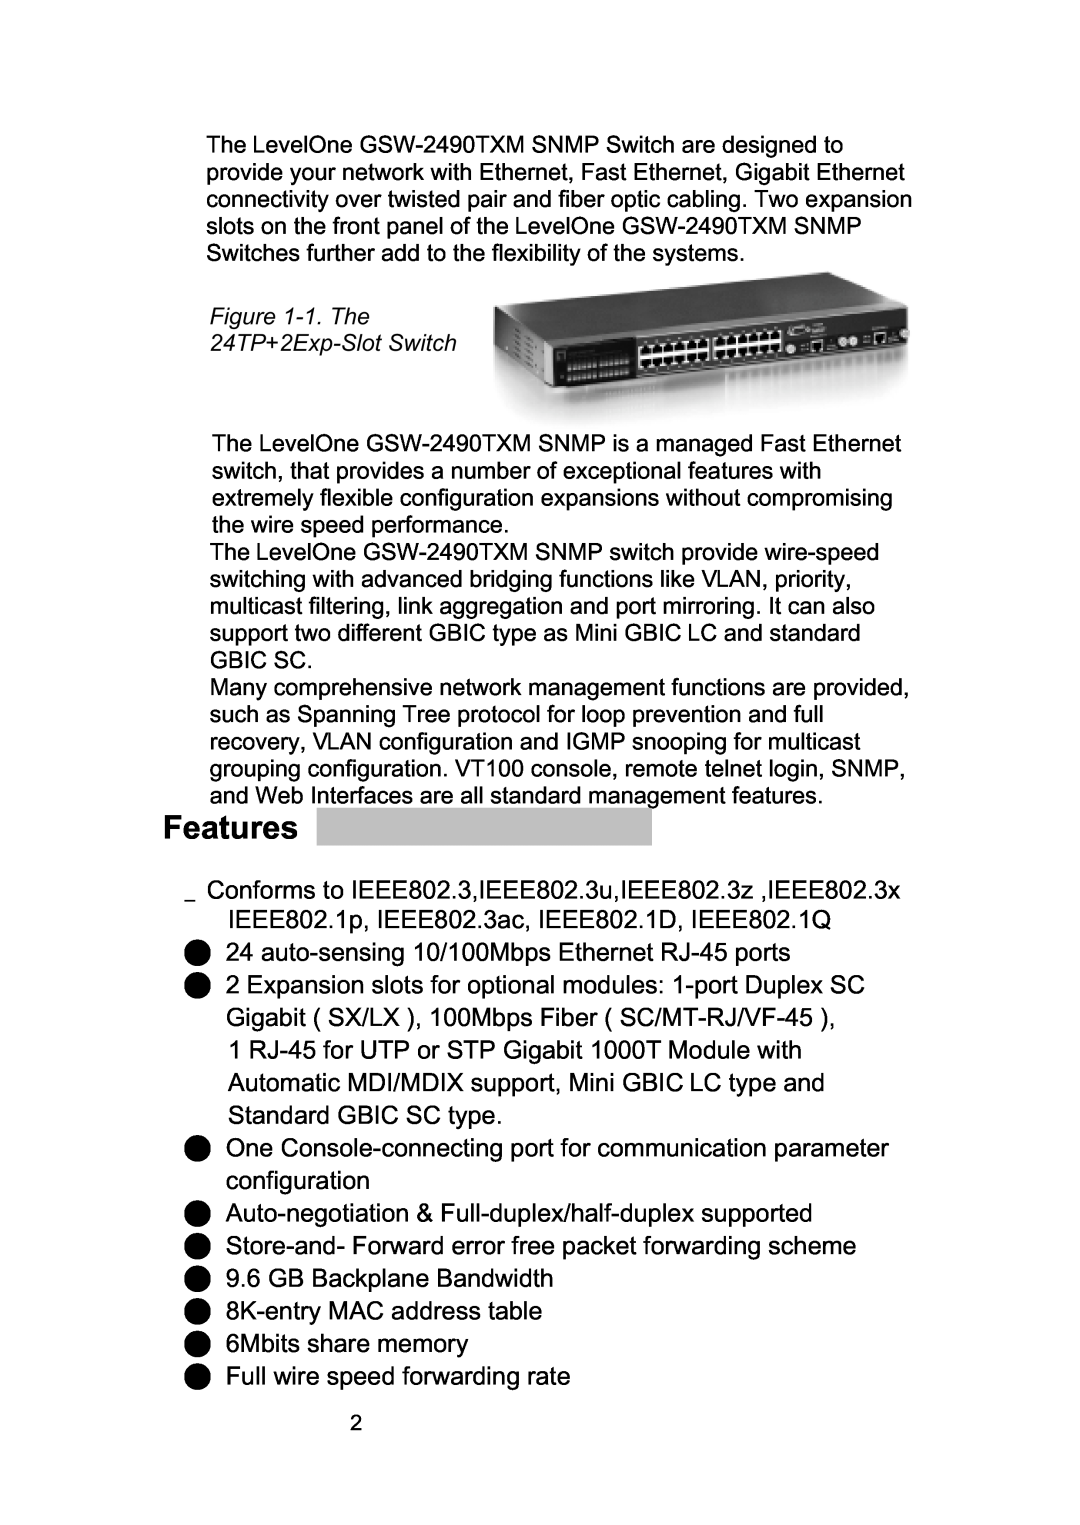 LevelOne GSW-2490TXM manual Features 